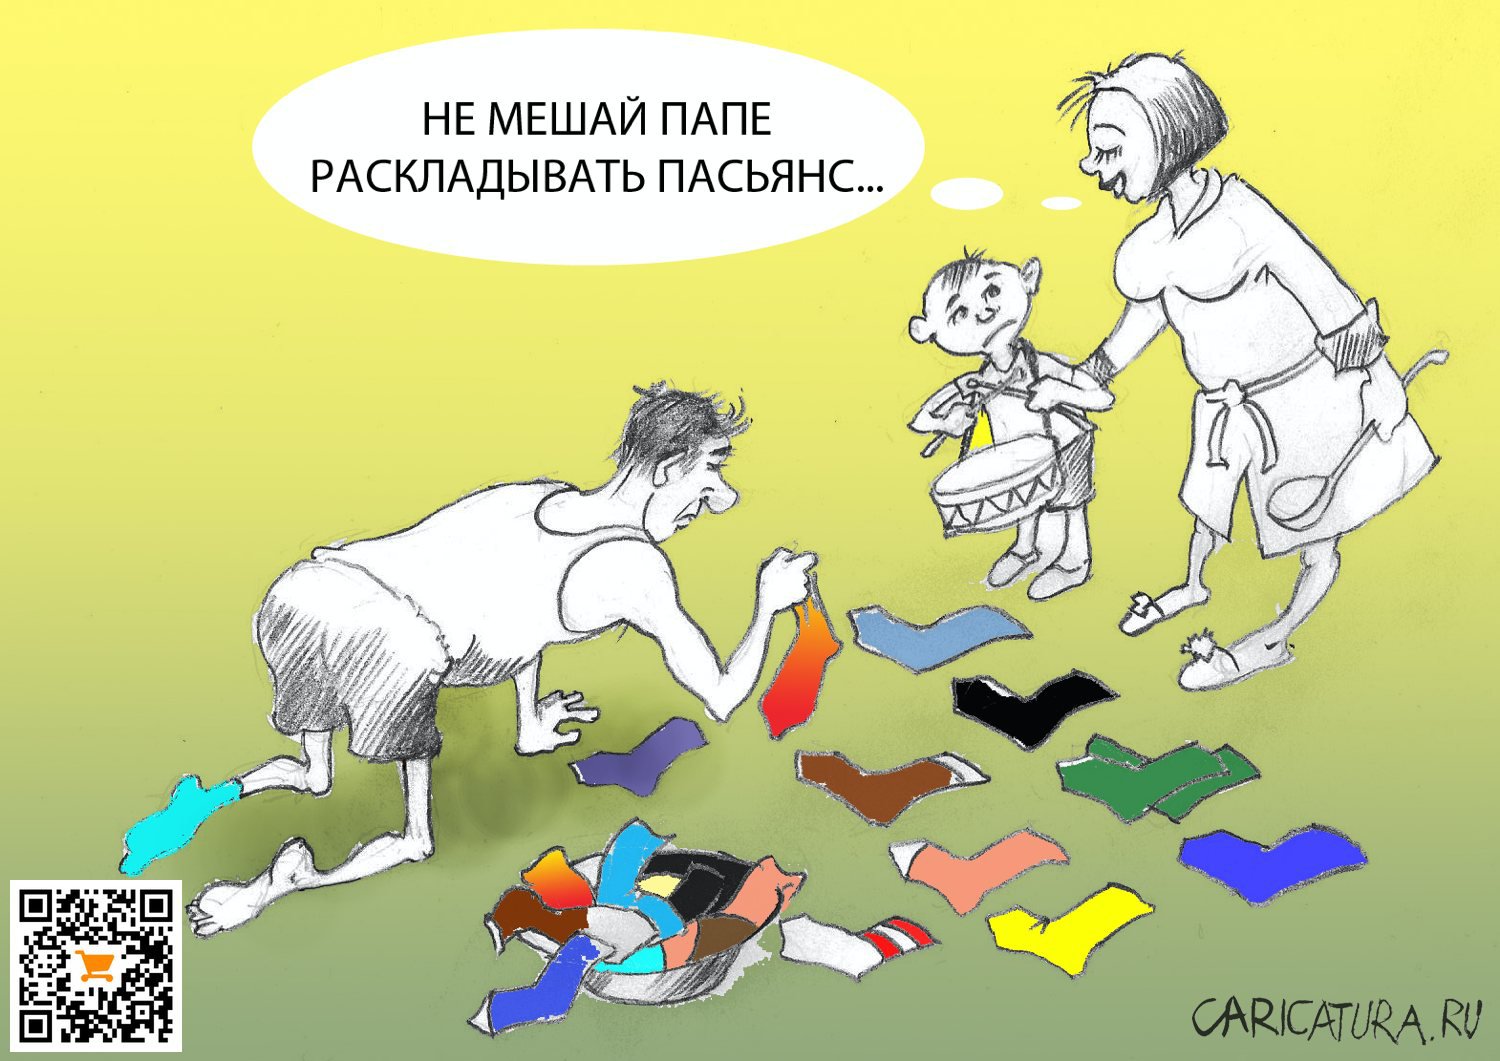 Карикатура "Пасьянс", Александр Шульпинов